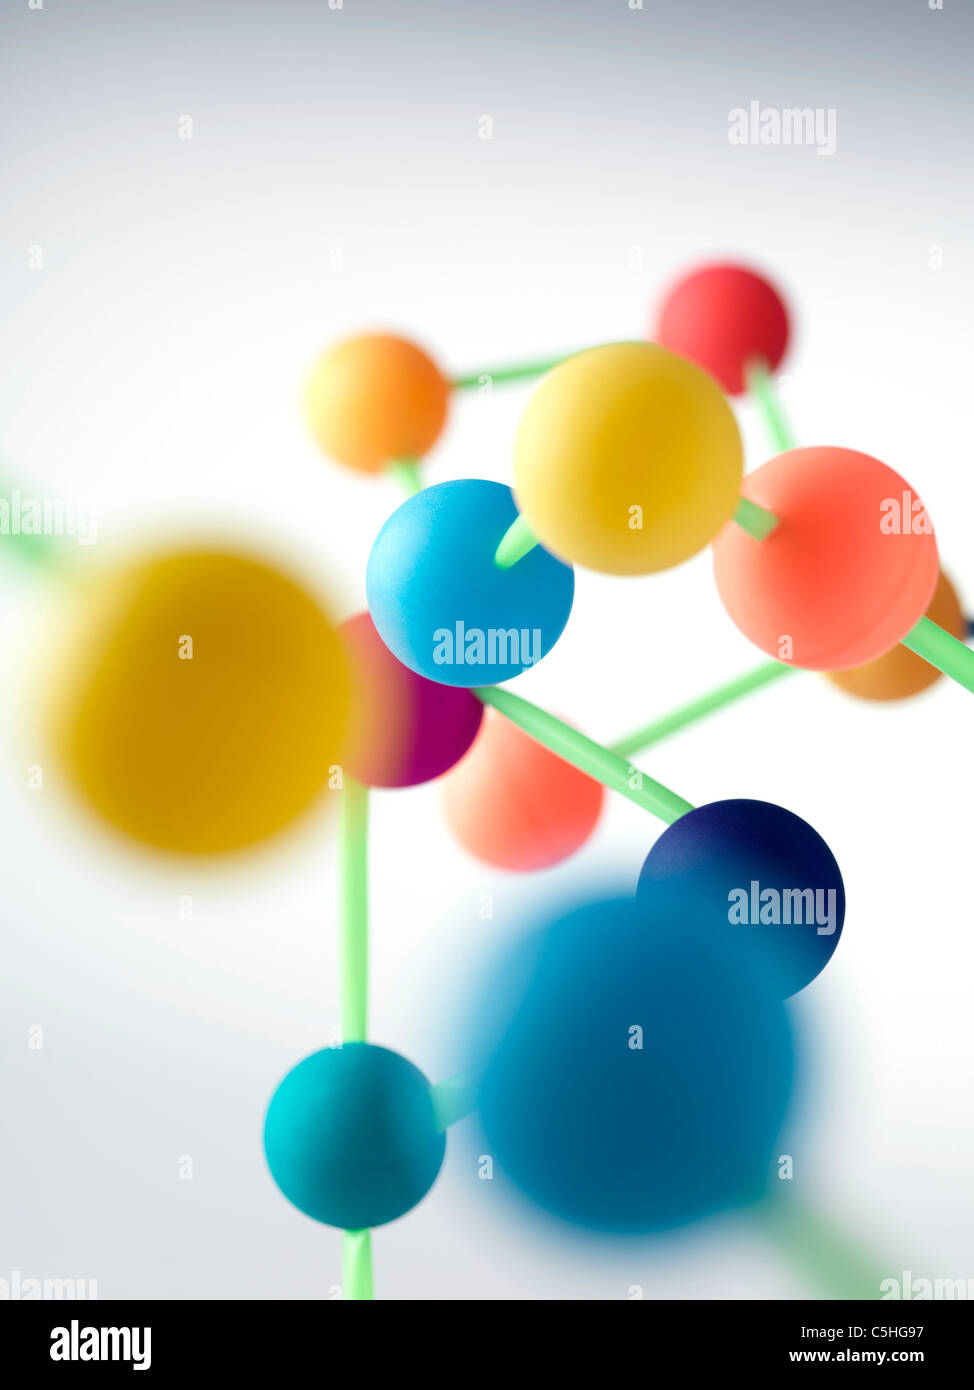 Molekulare Struktur Stockfoto